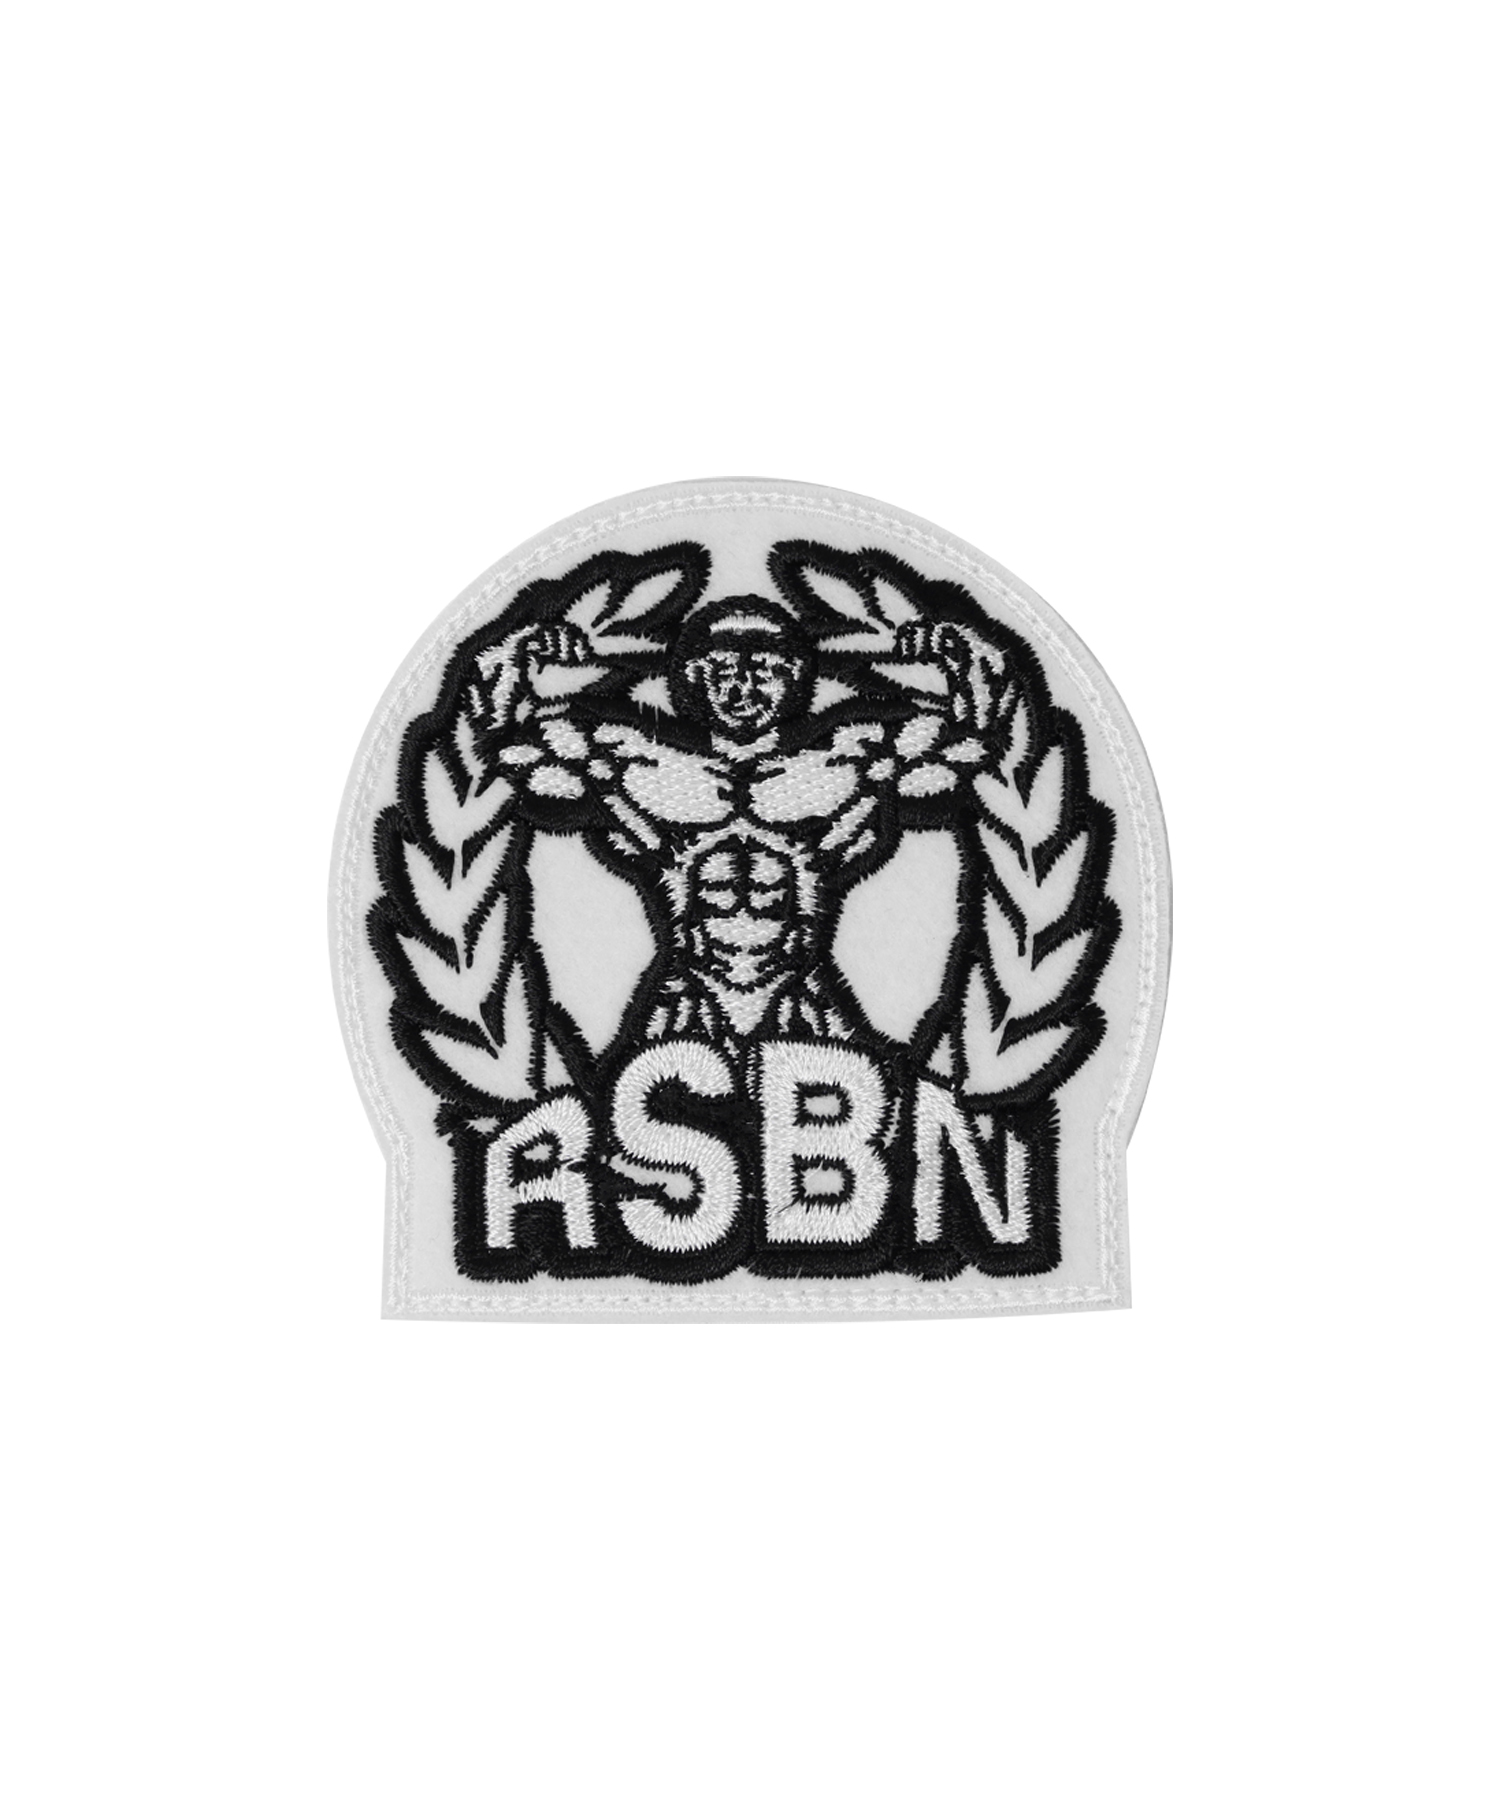 RSBN PATCH [WHITE]